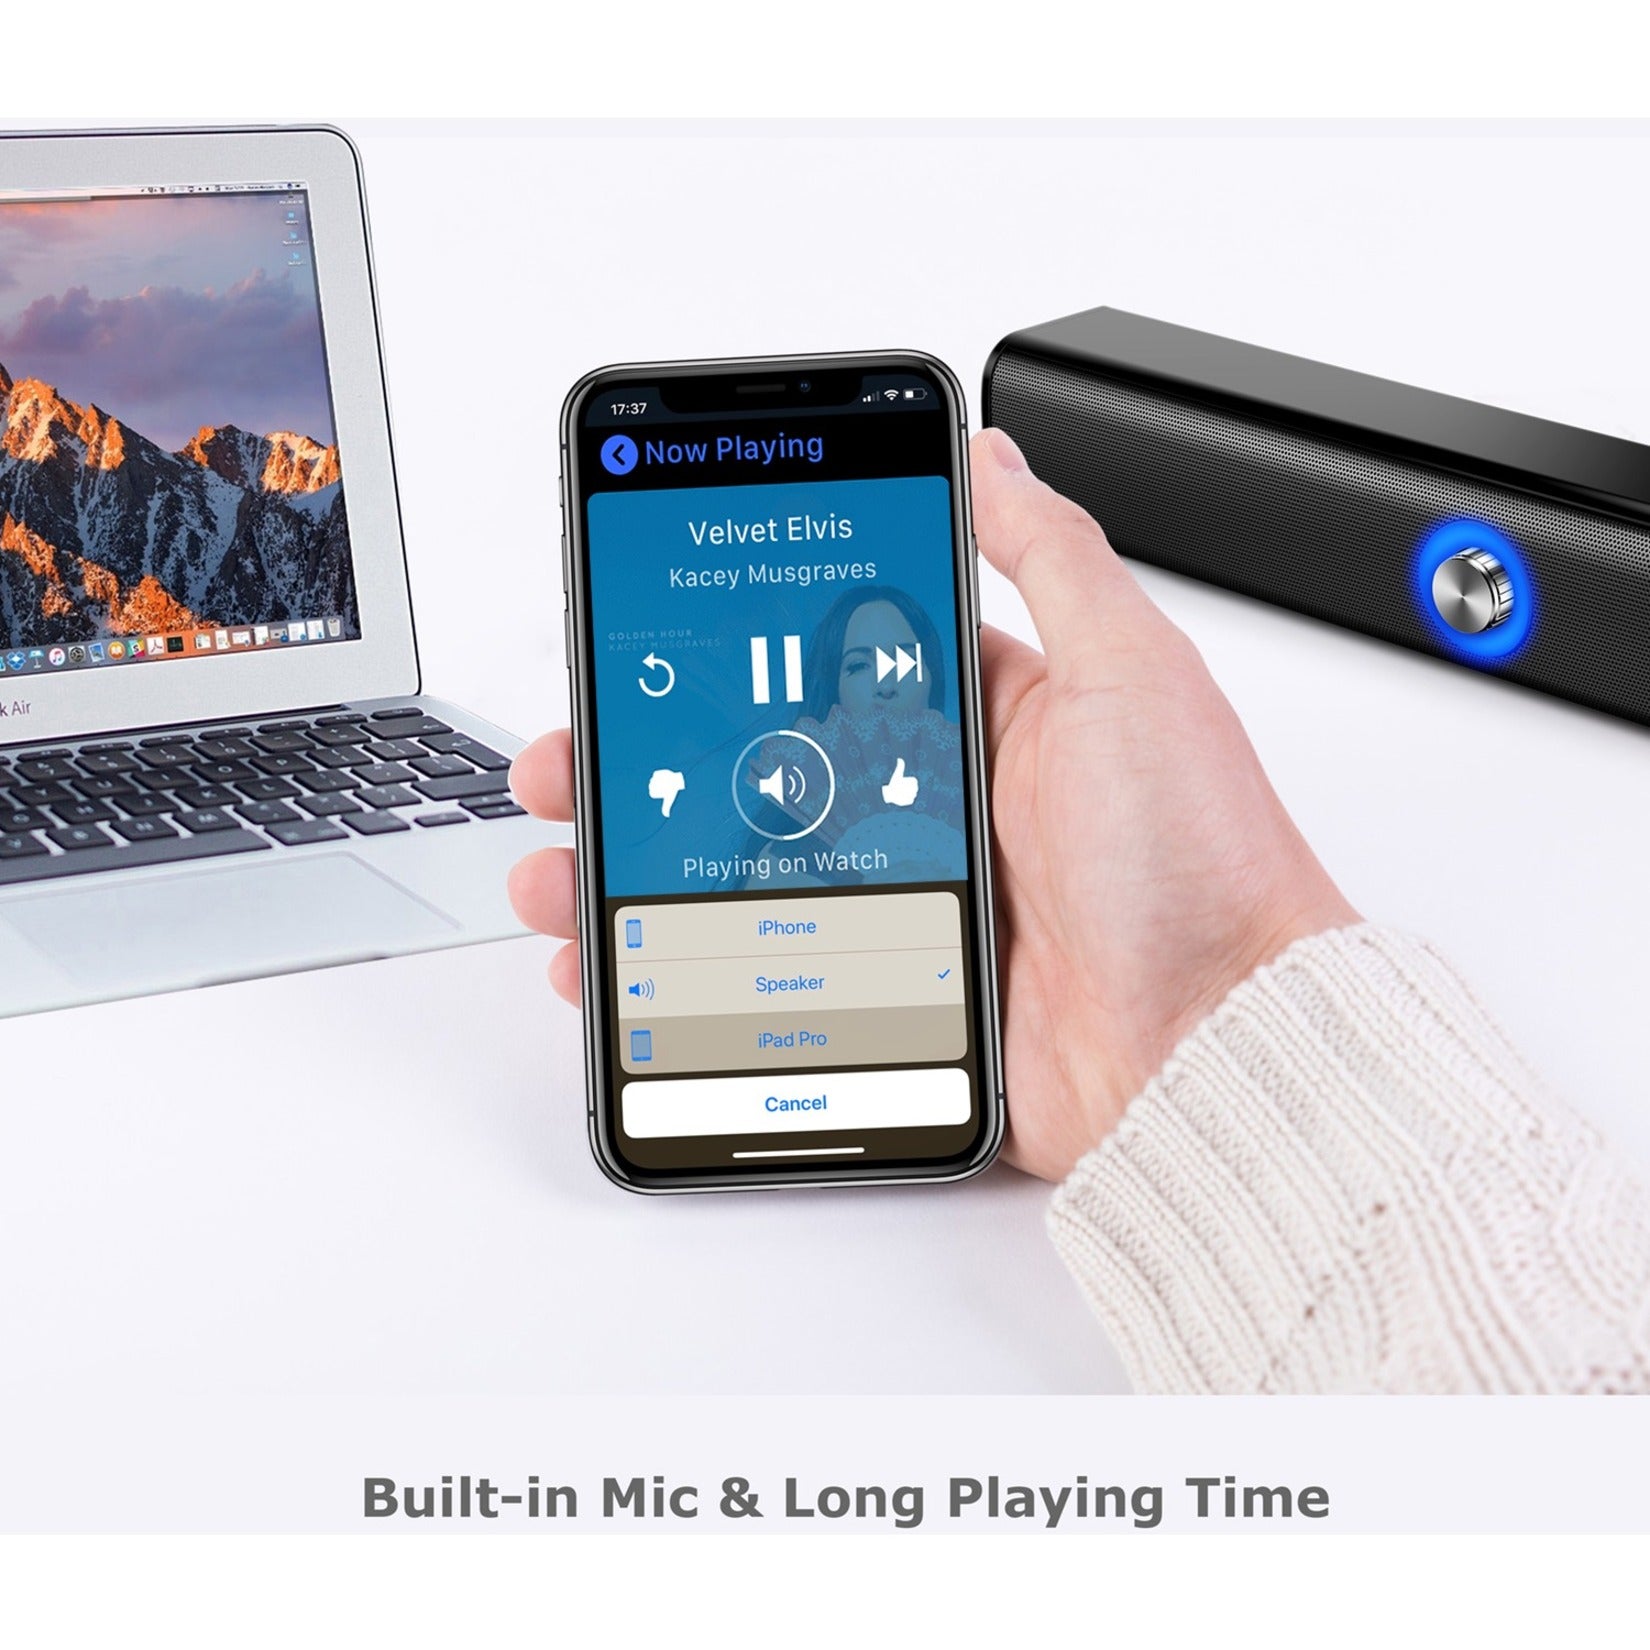 Adesso XTREAM S6 Bluetooth Sound Bar Speaker 10W*2, Portable Wireless Speaker with USB Charging Port